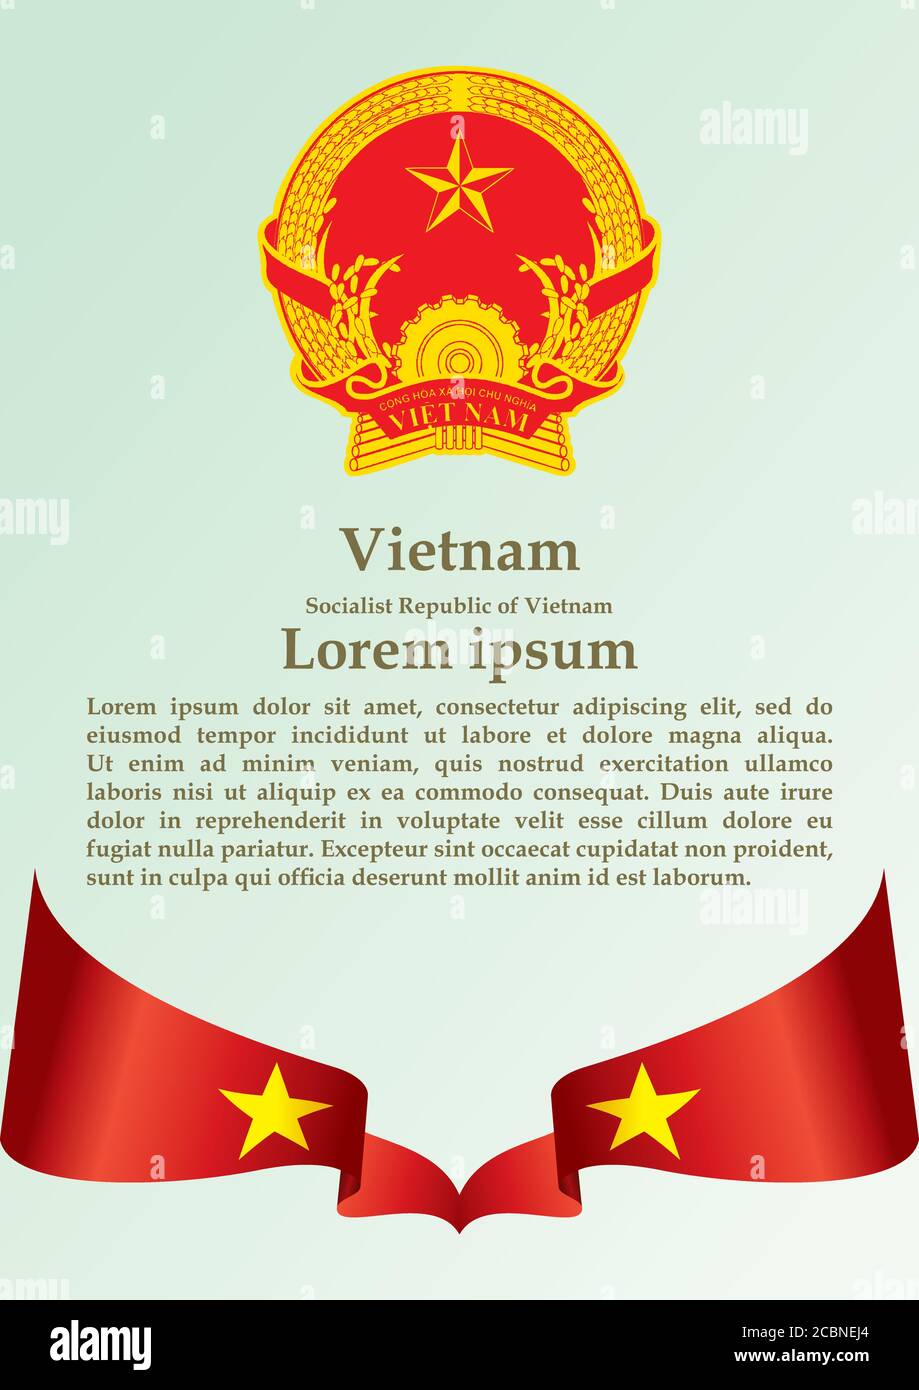 Flag of Vietnam, Socialist Republic of Vietnam, template for award design, an official document with the flag of the Socialist Republic Of Vietnam. Stock Vector